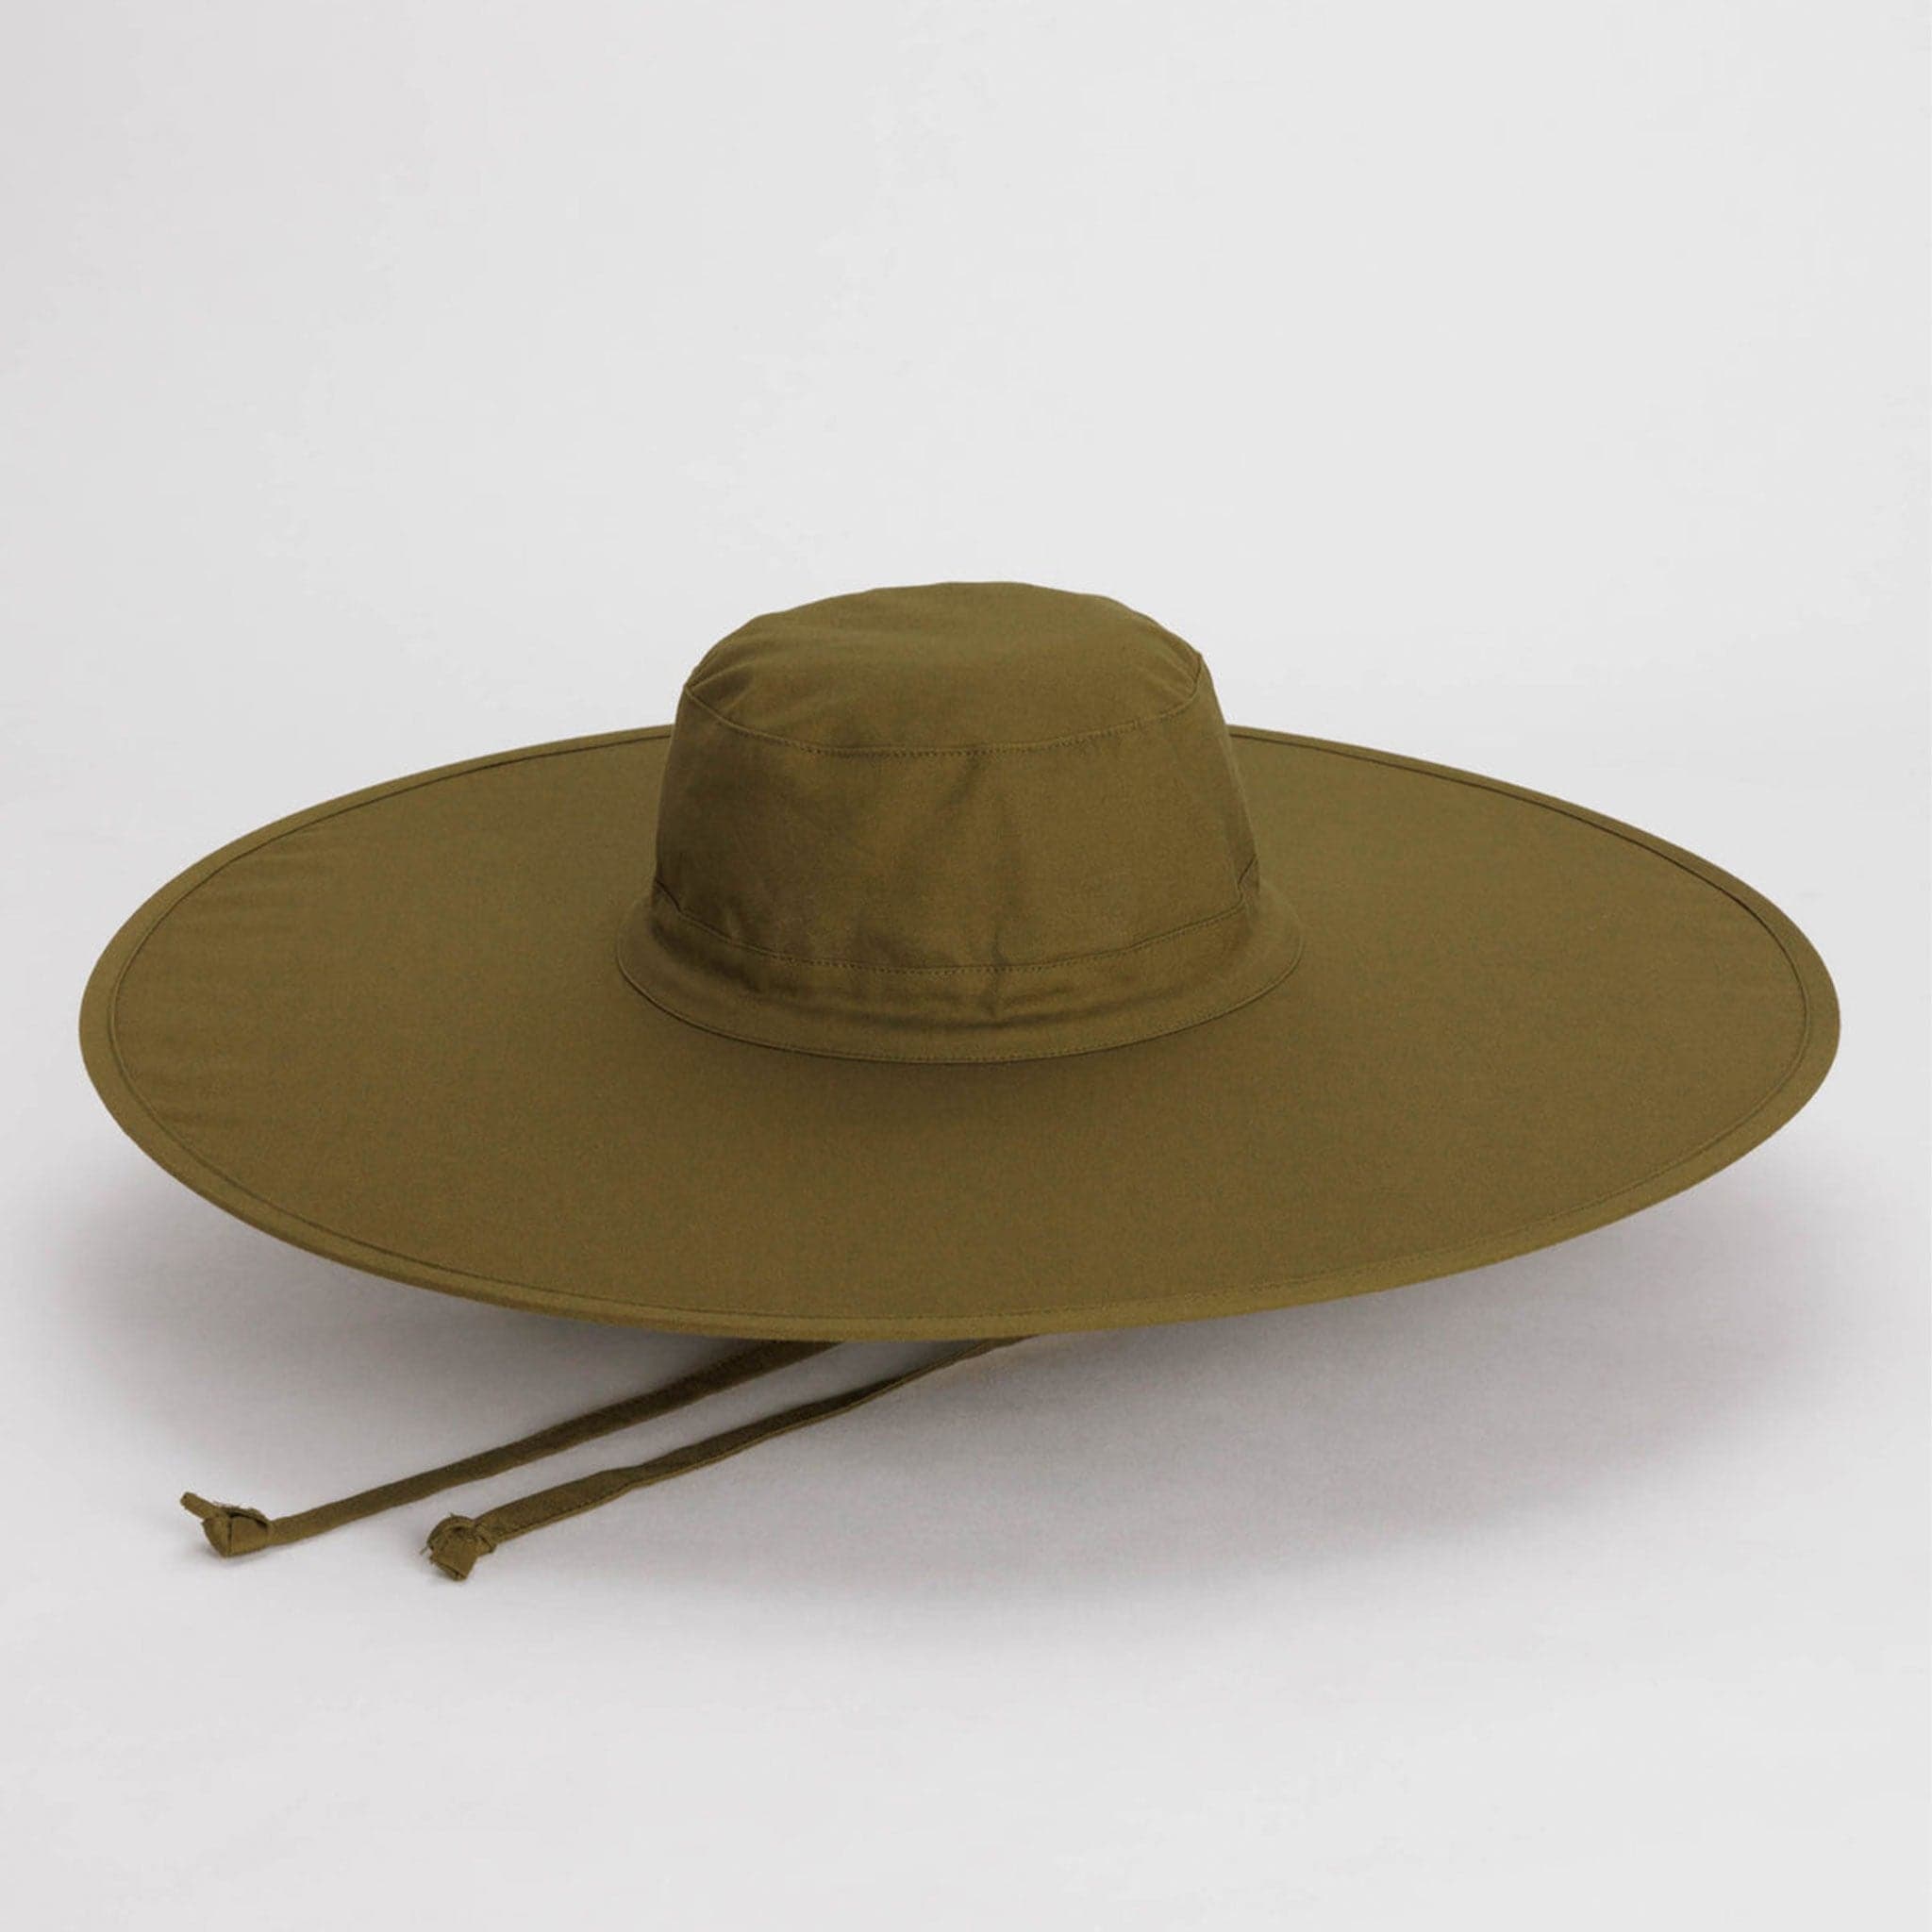 A khaki green wide brim nylon hat with a neck strap.